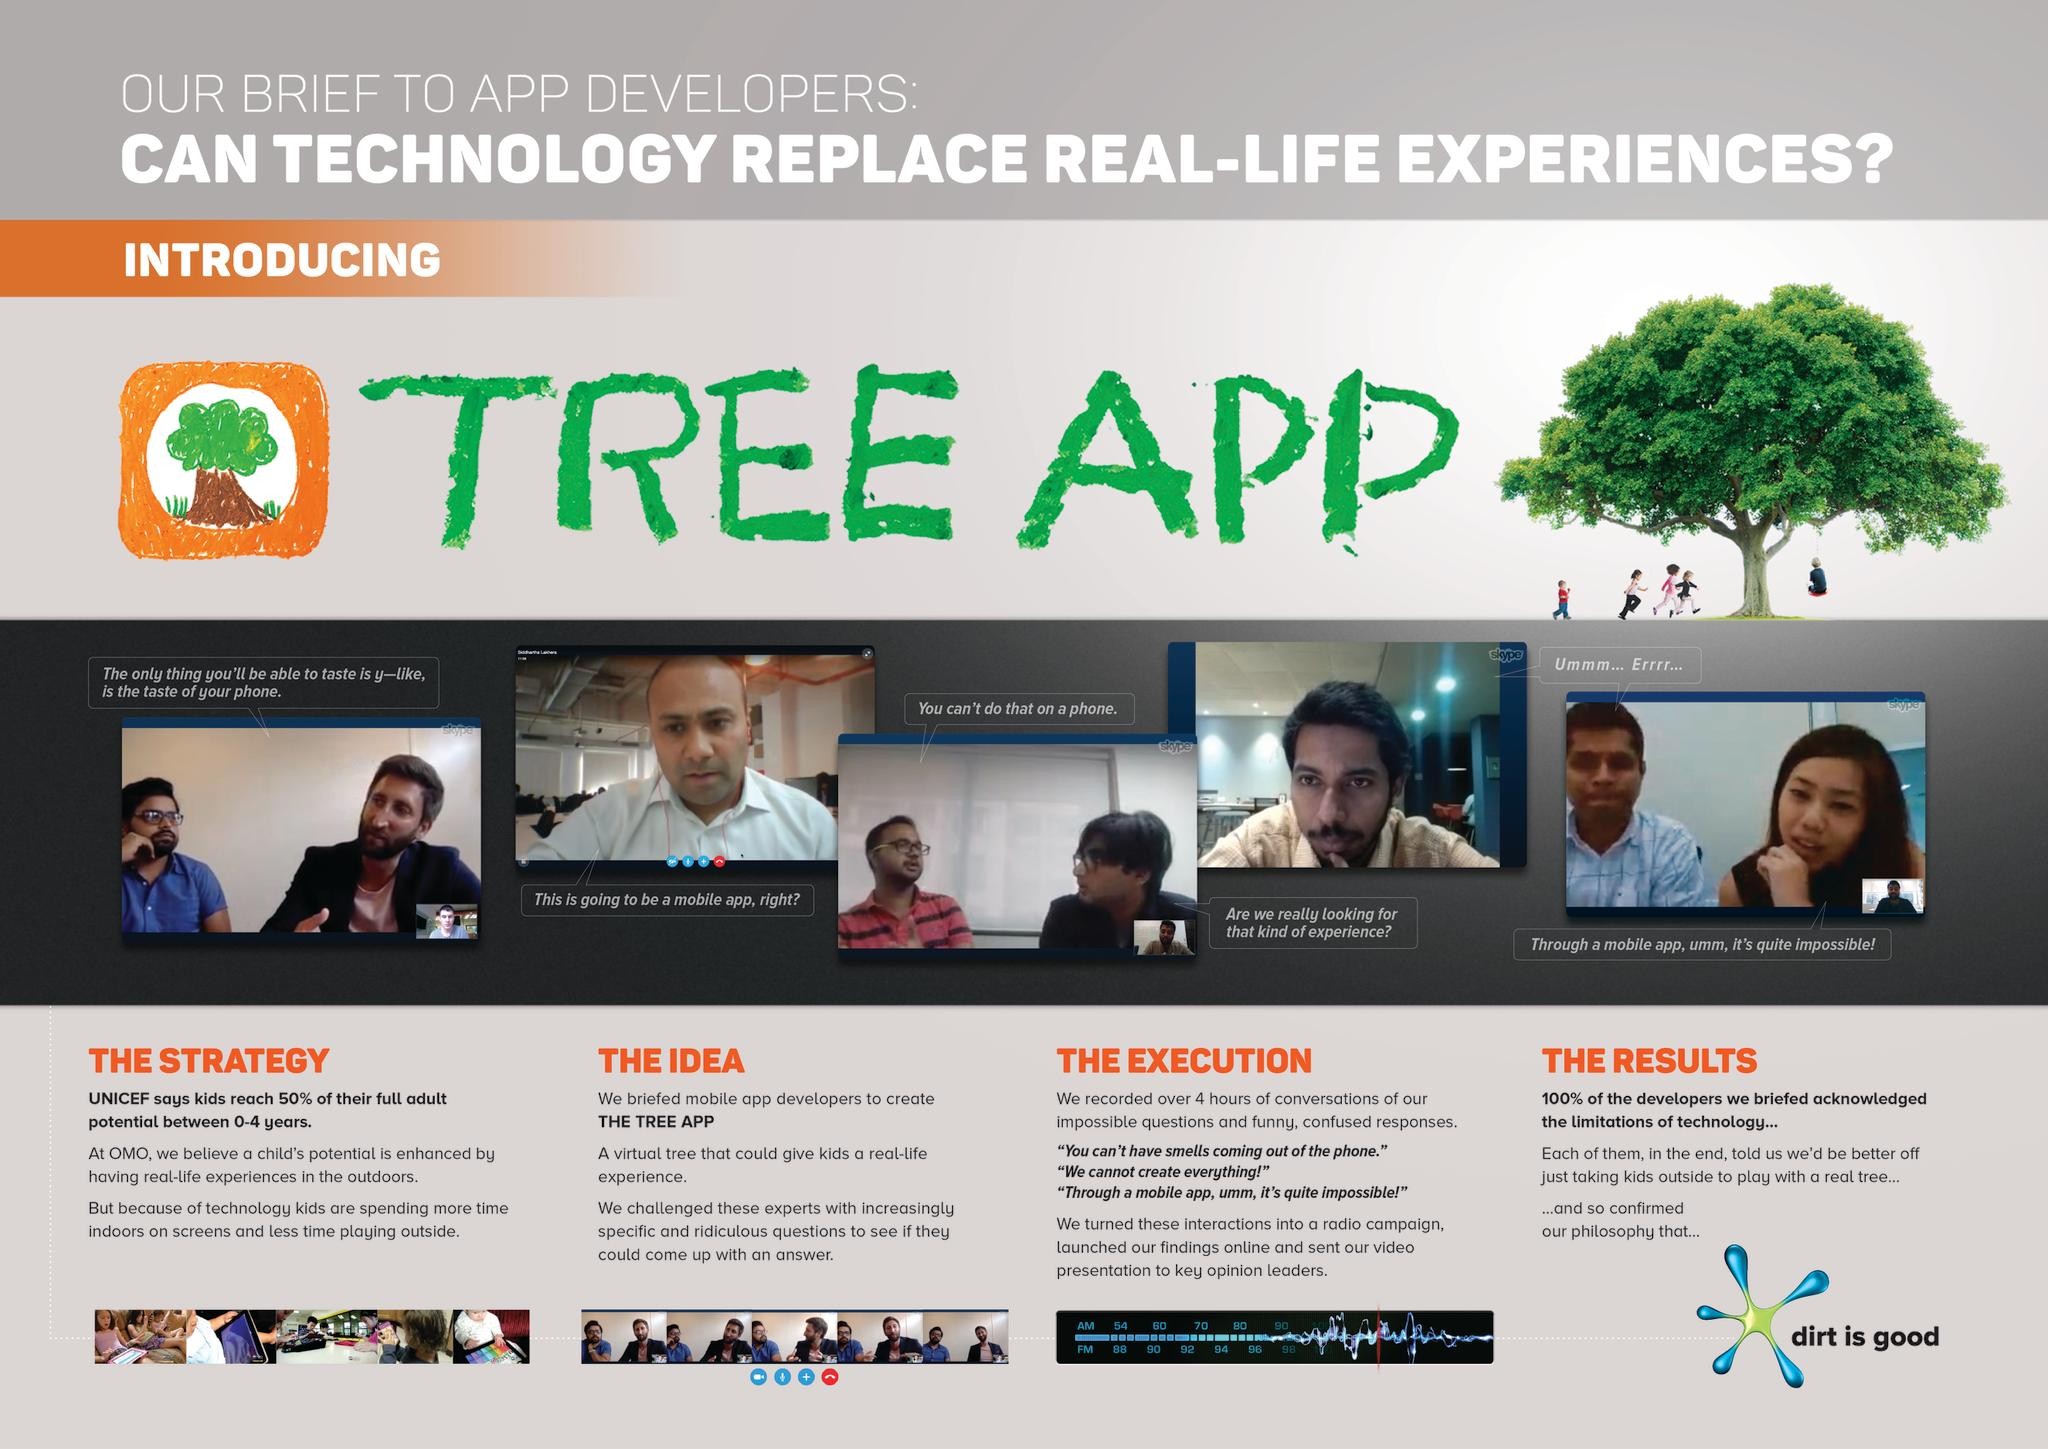 The Tree App